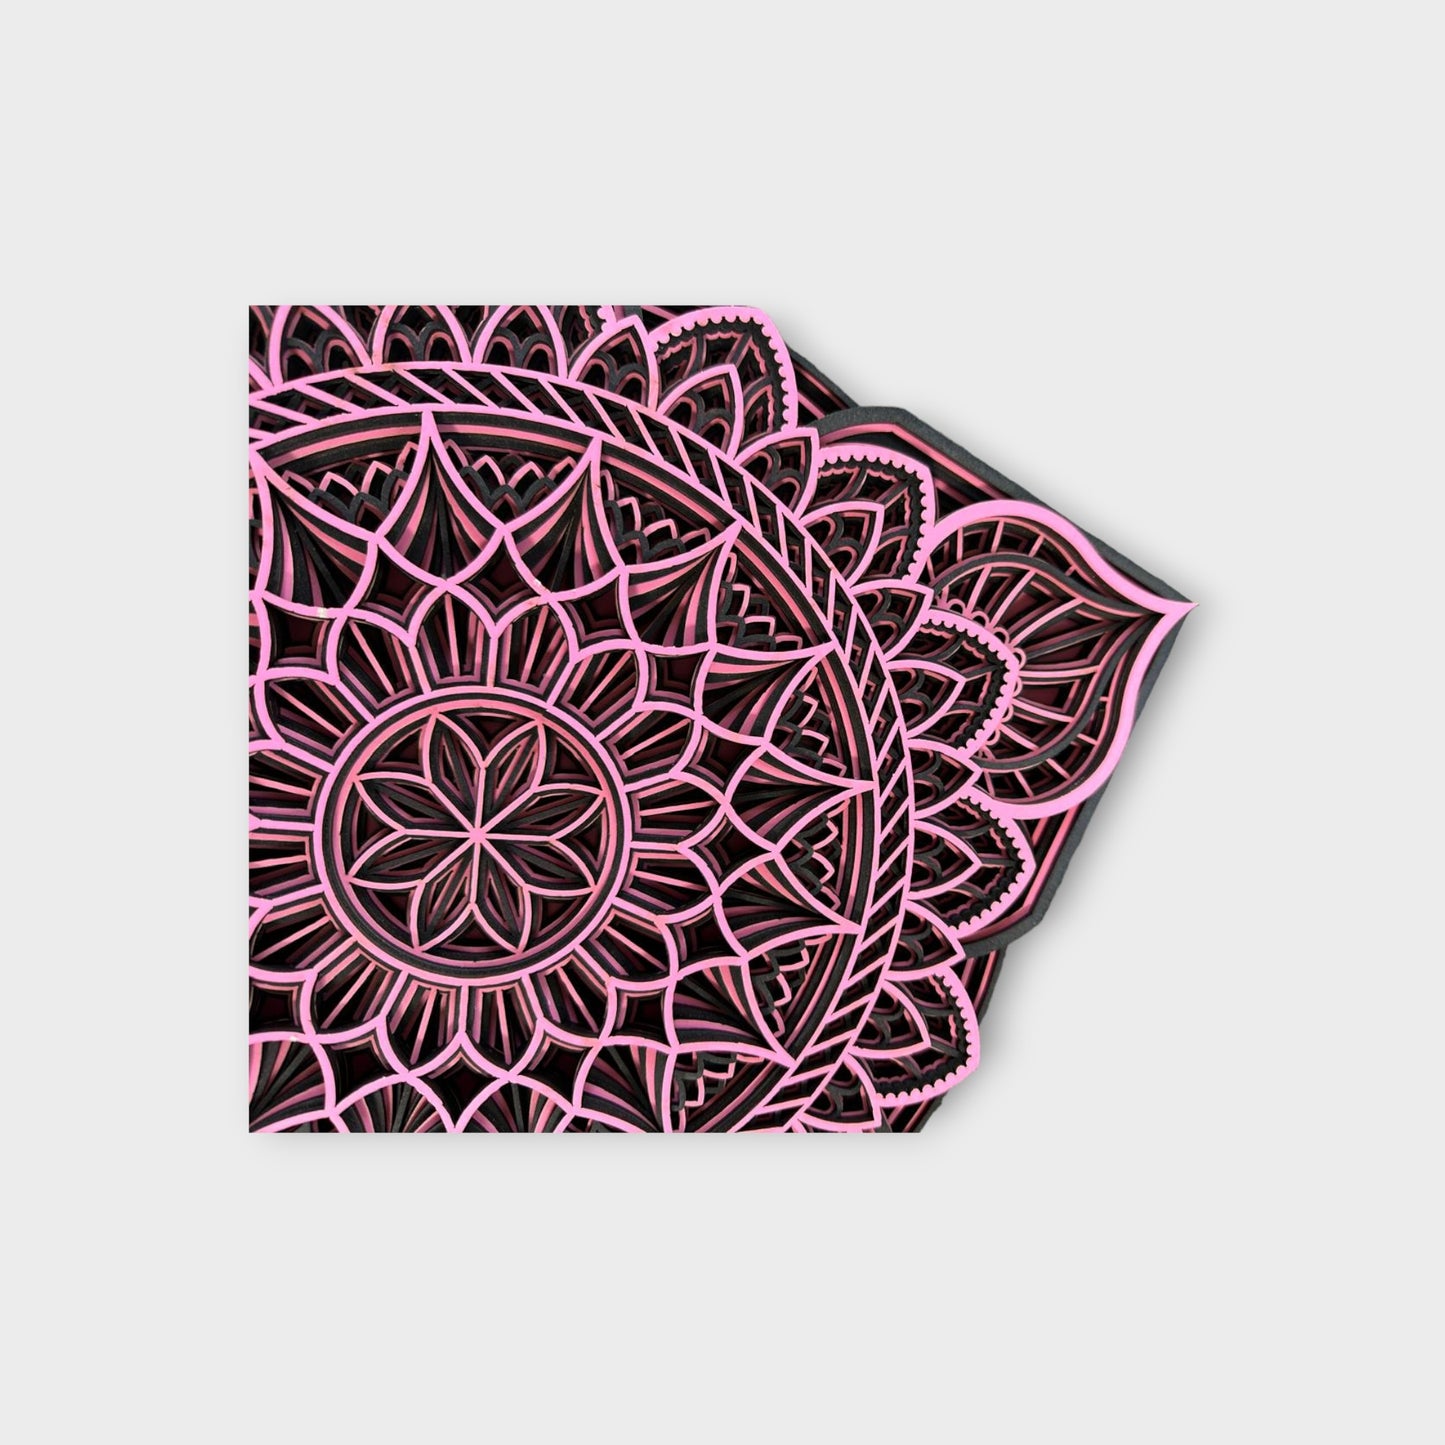 Multi Layers Pink Black Composition Square Mandala